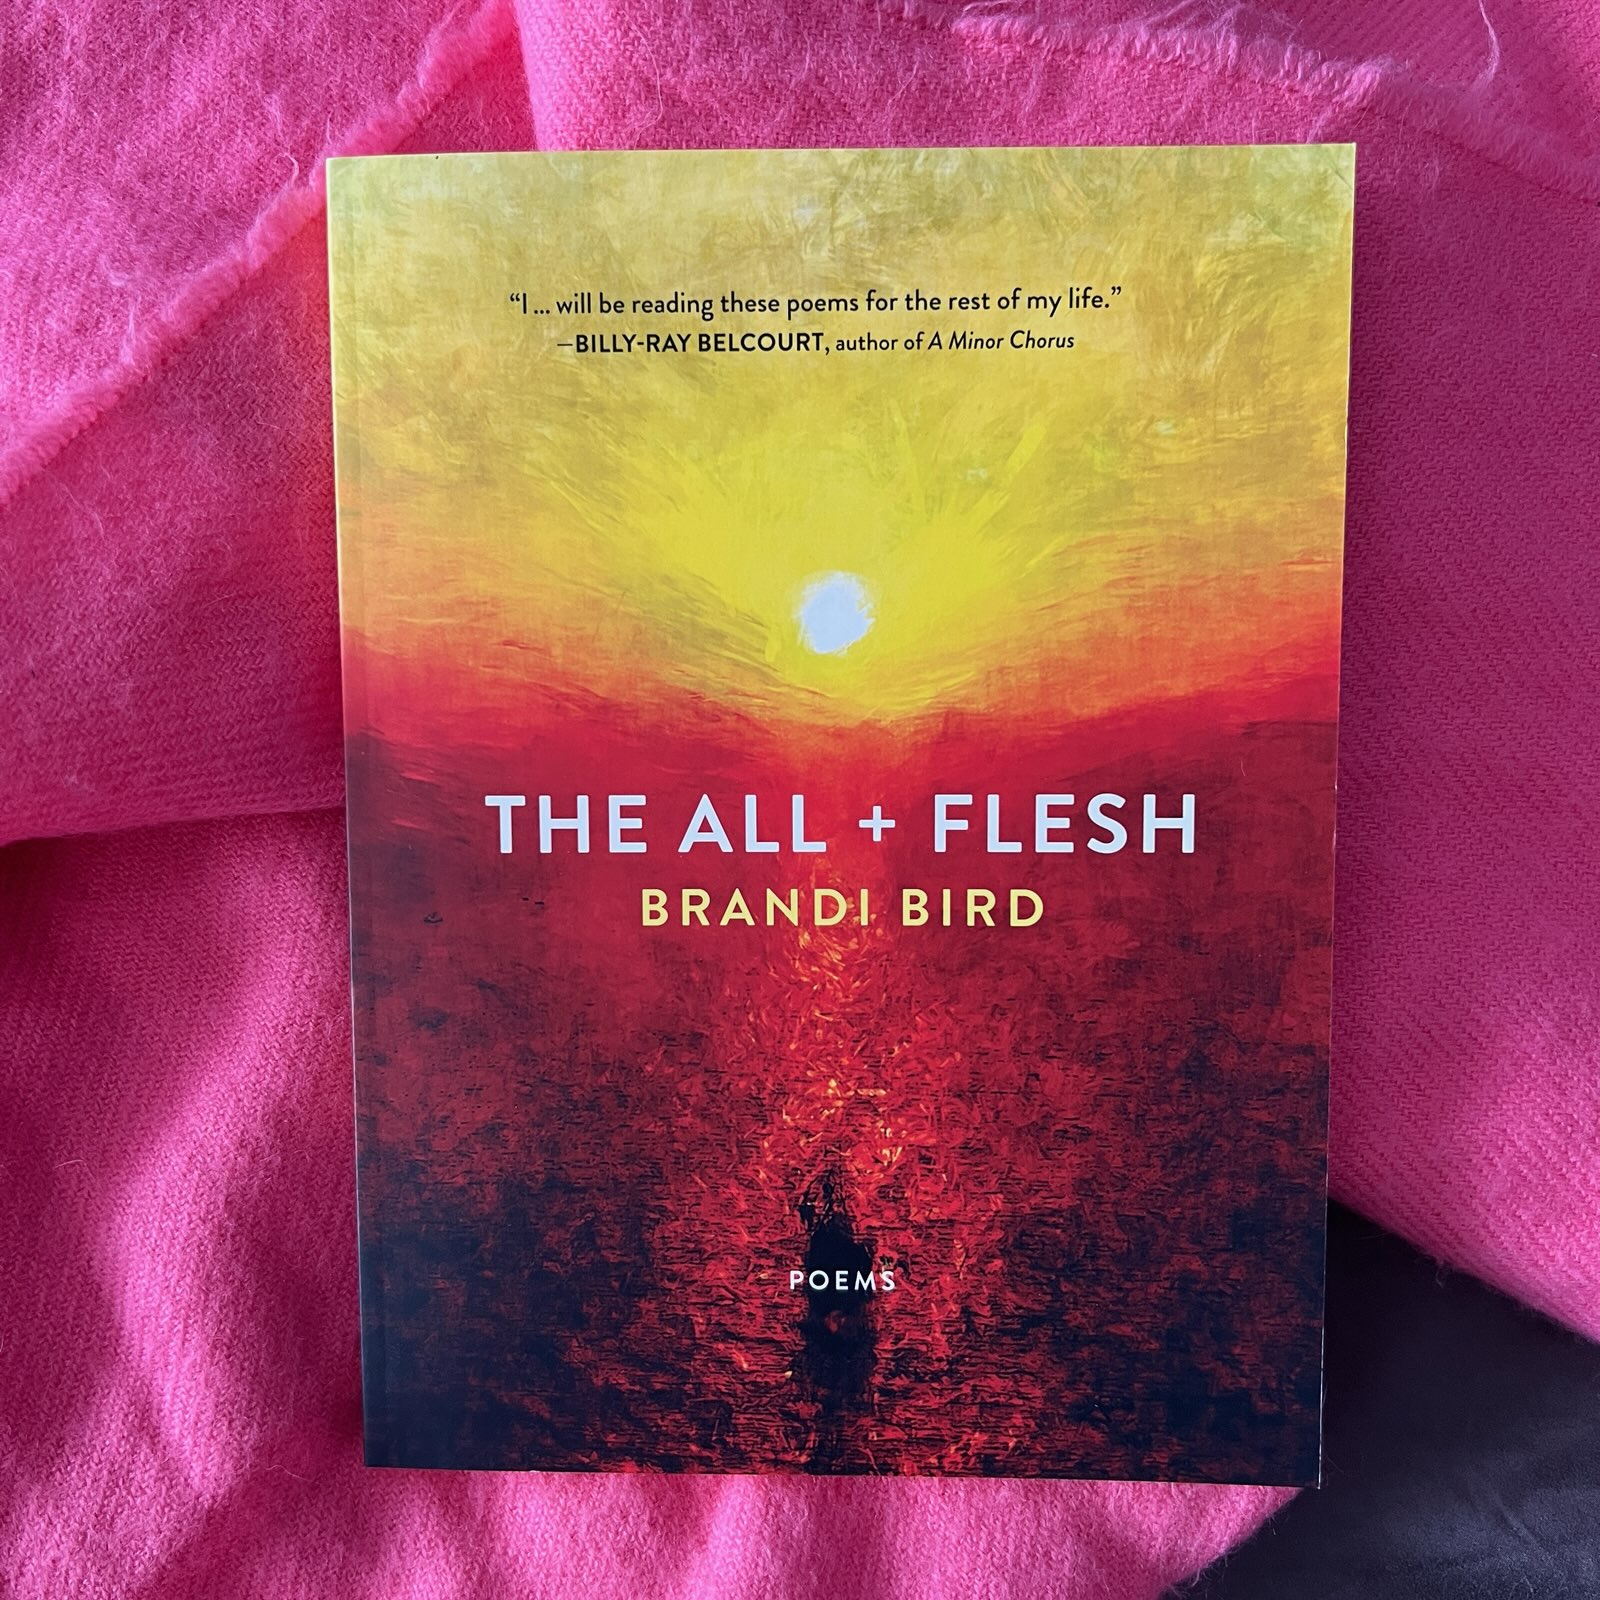 128: The All + Flesh by Brandi Bird